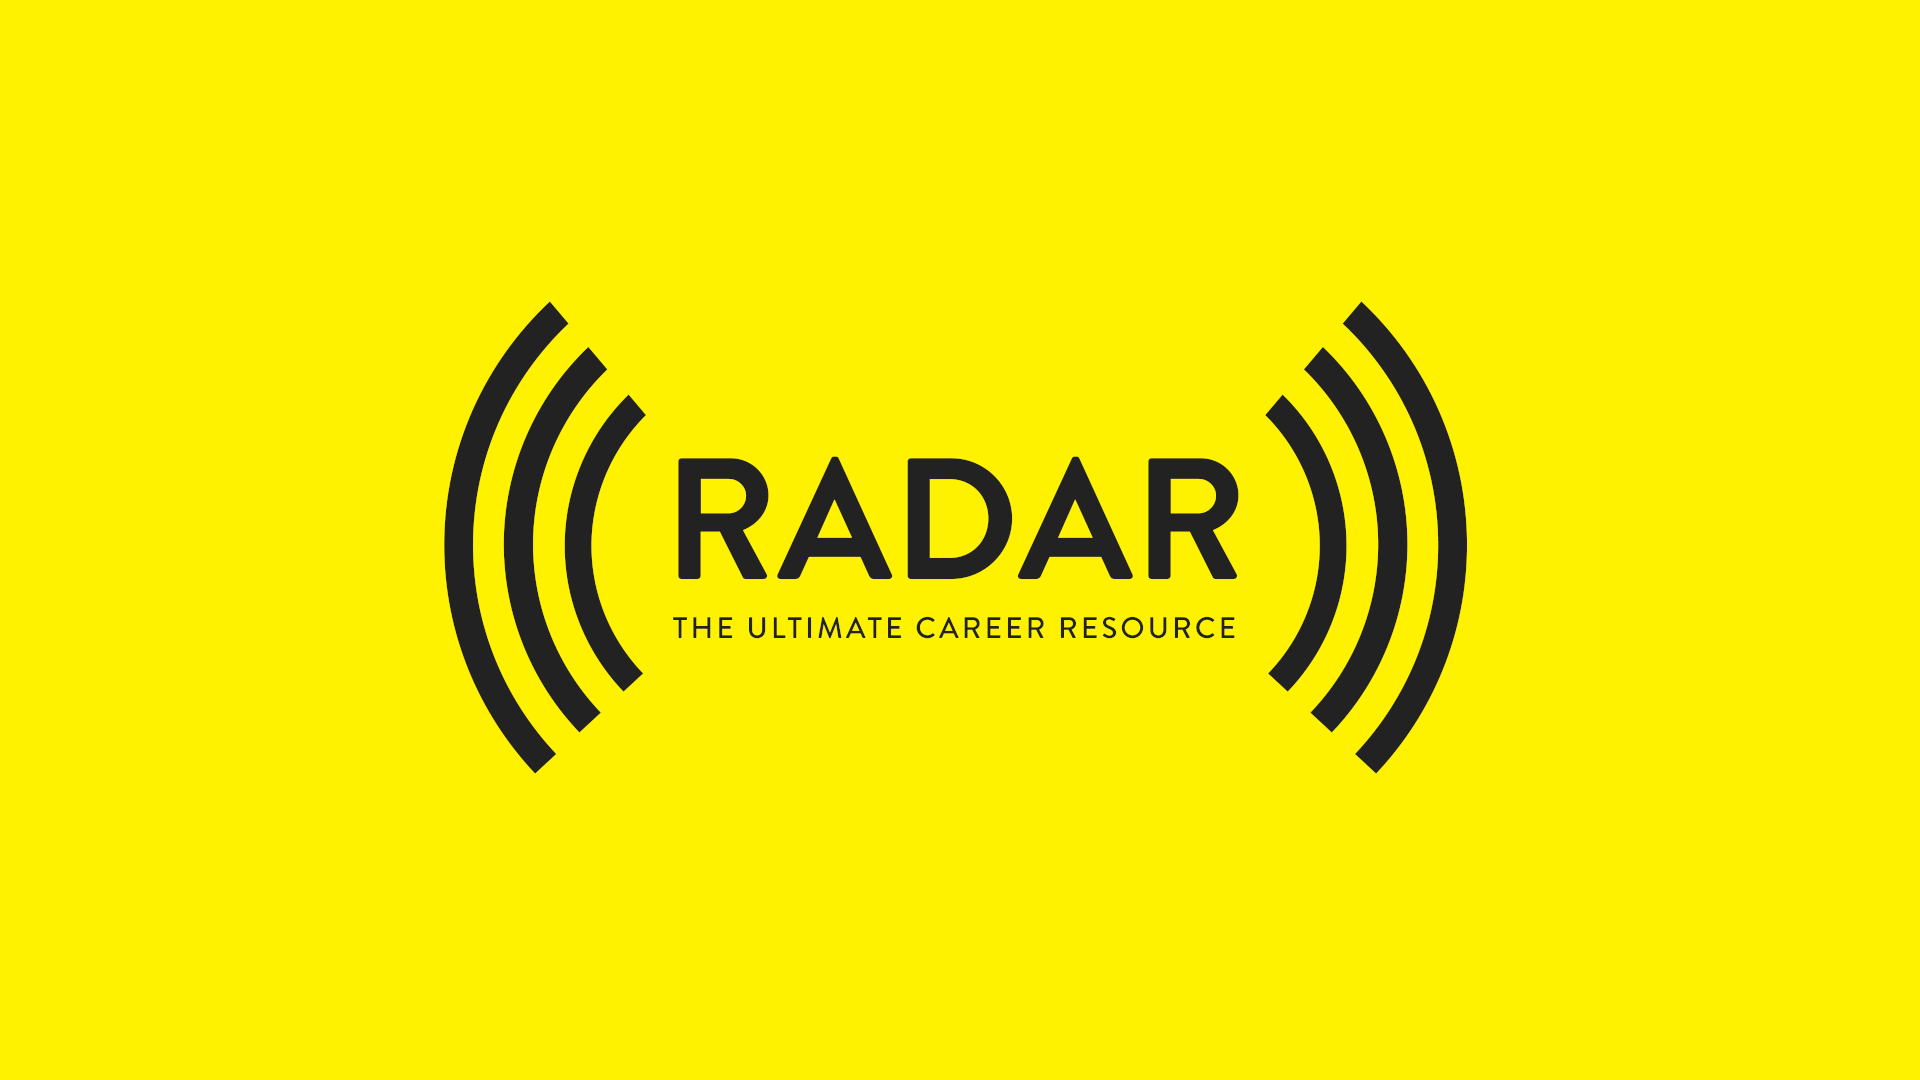 Radar brand design by Gillian Heron